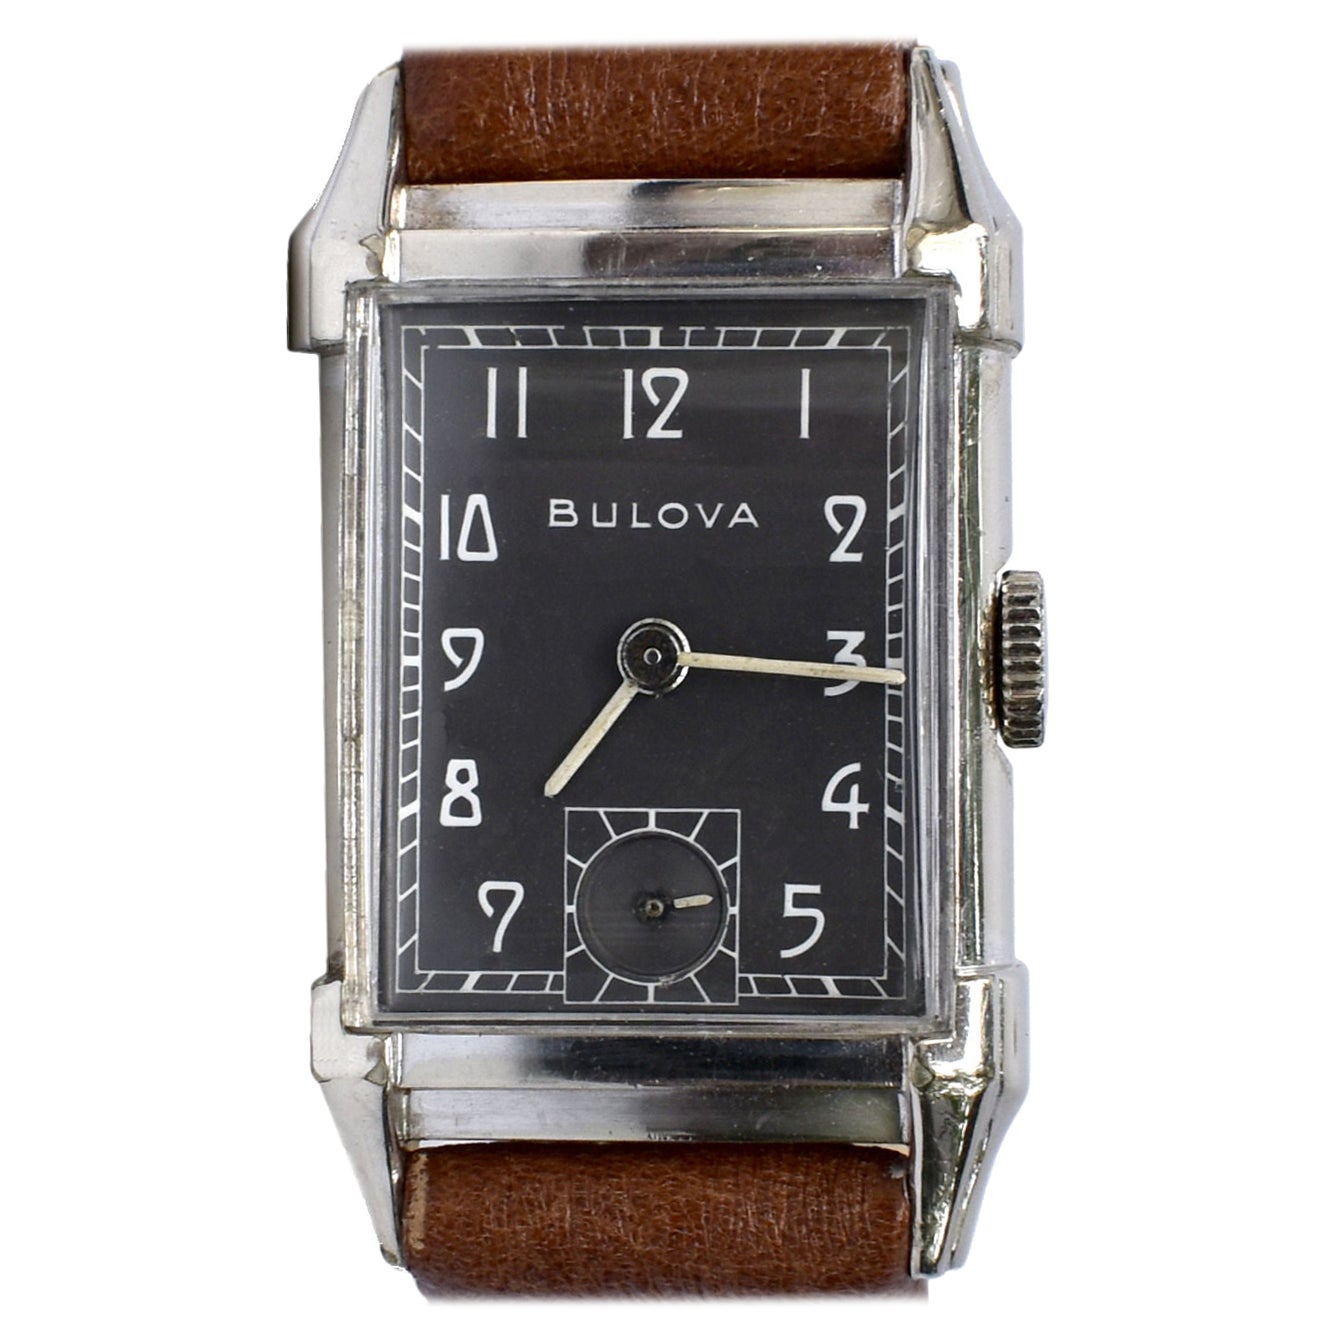 Art Deco Gents White Gold Filled Wrist Watch, Bulova, Fully Serviced, c1948